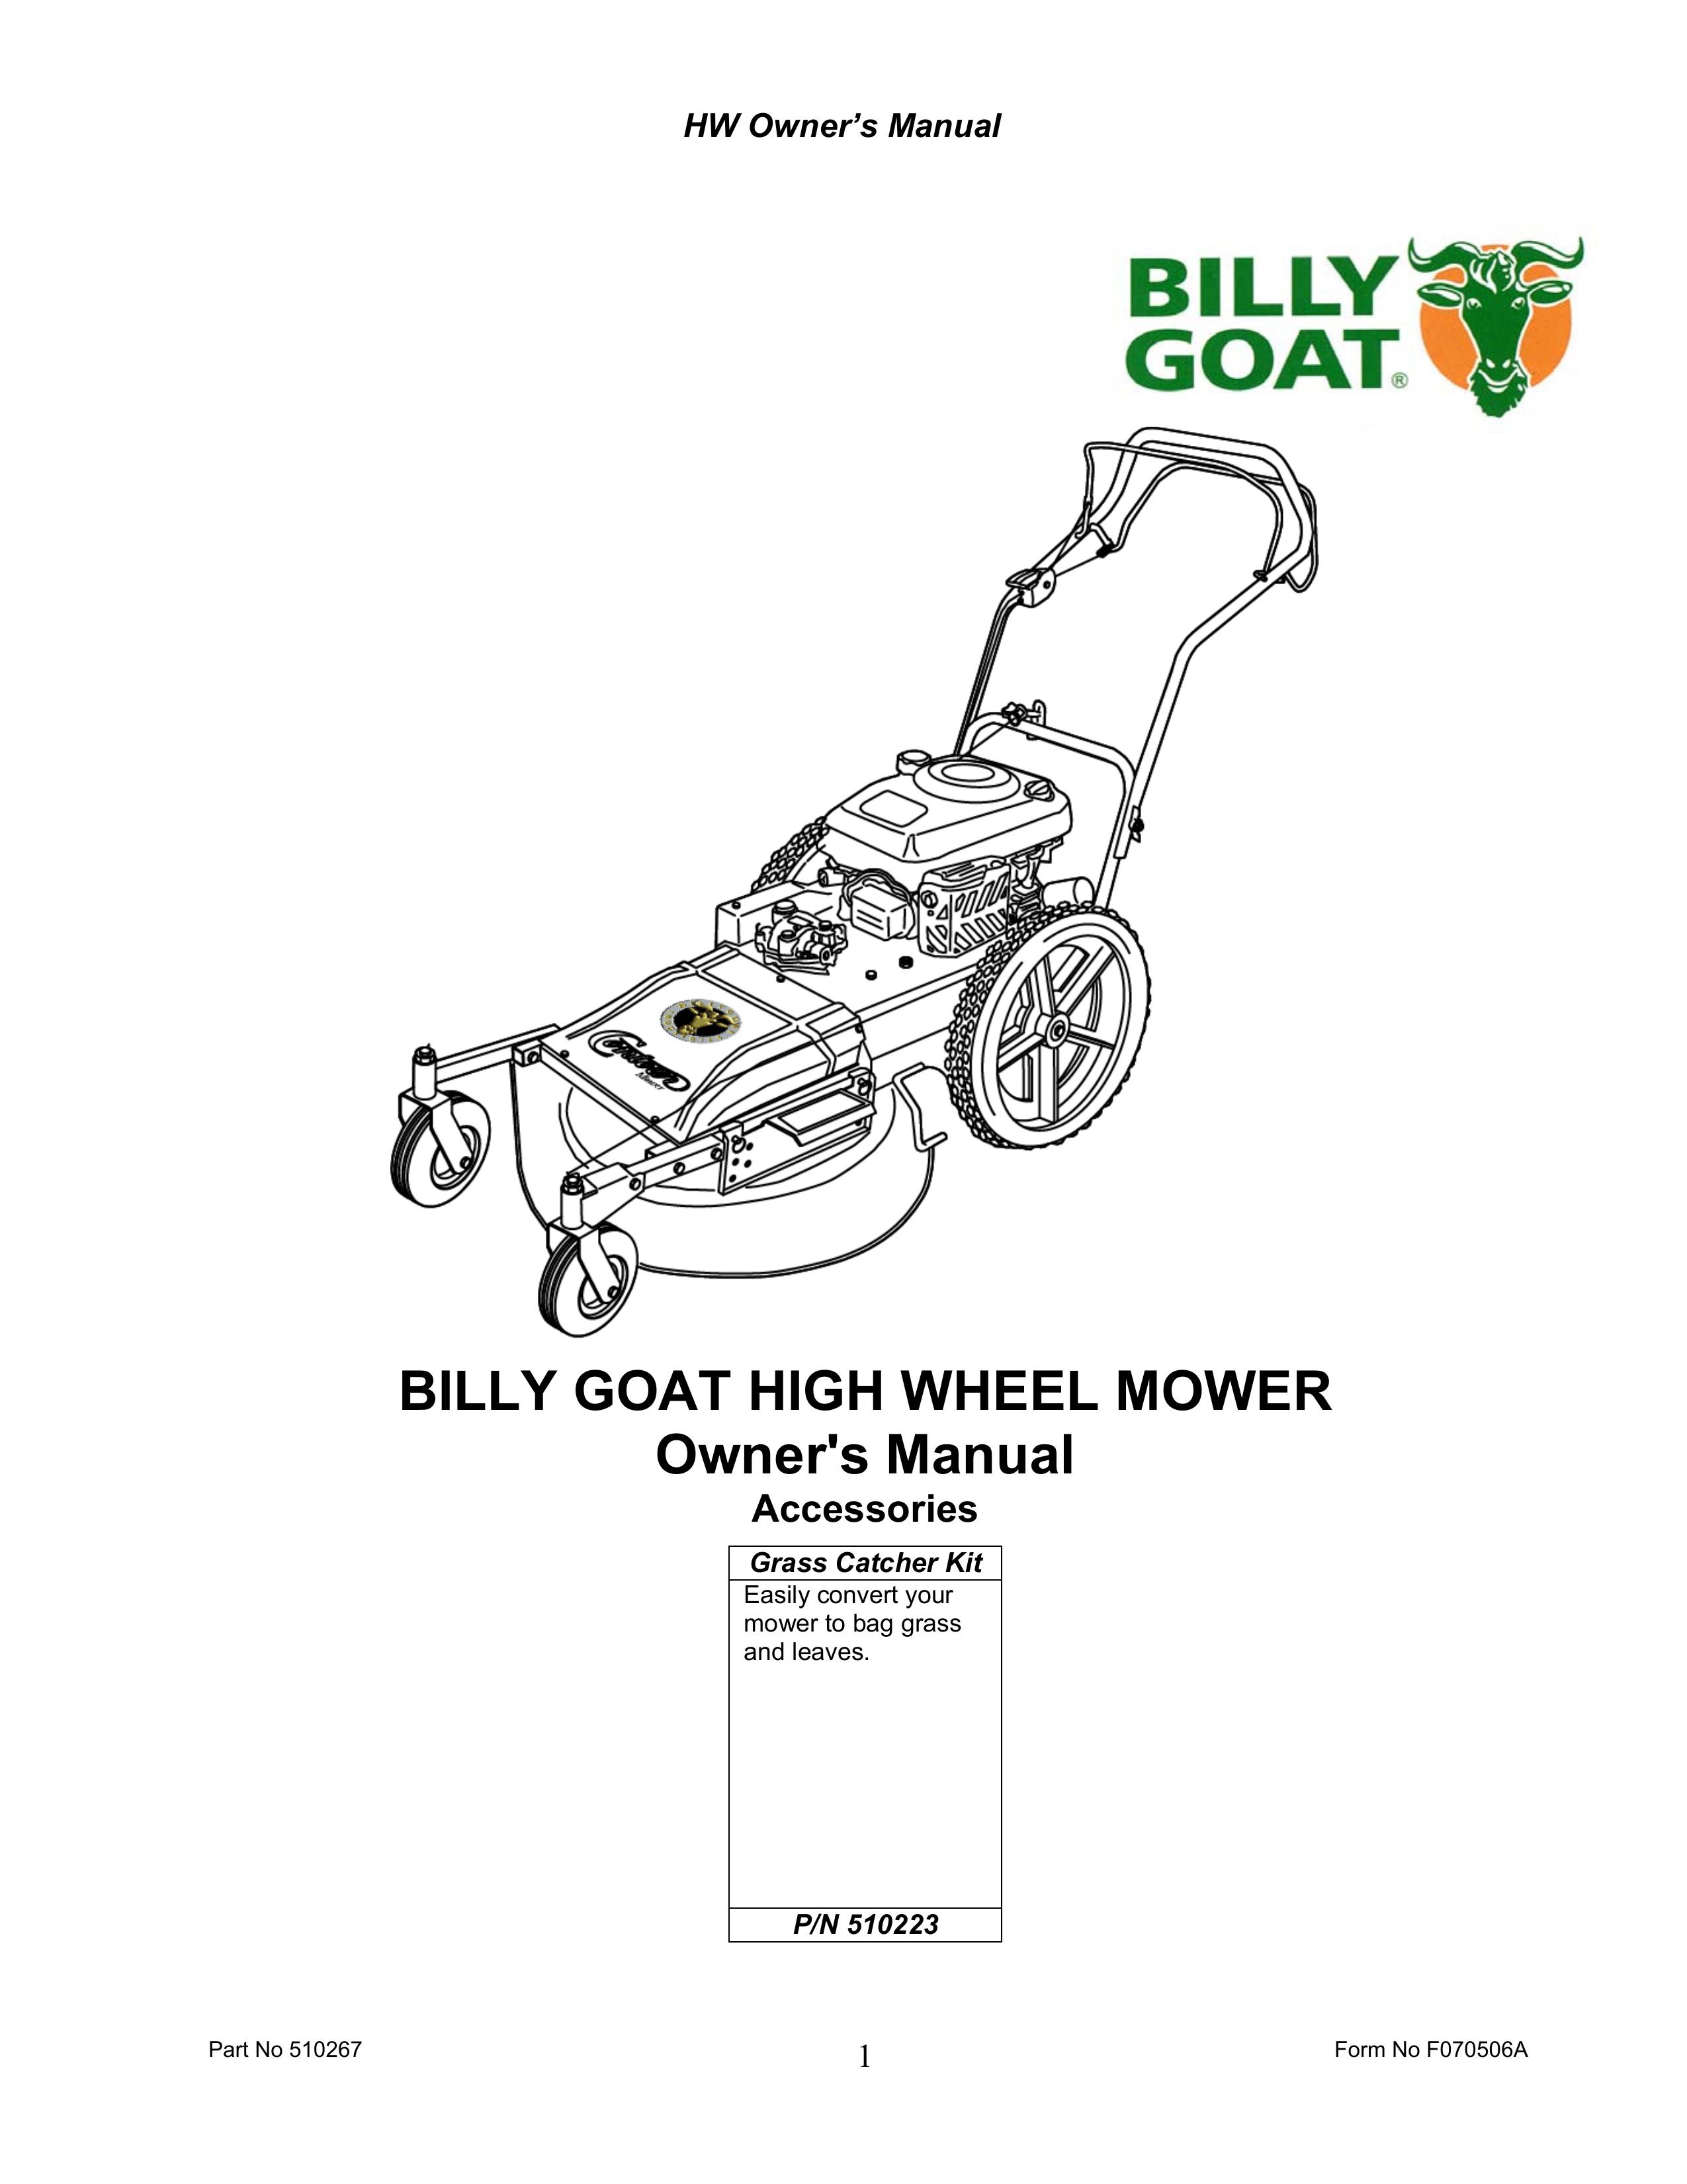 Billy Goat 510223 Lawn Mower User Manual